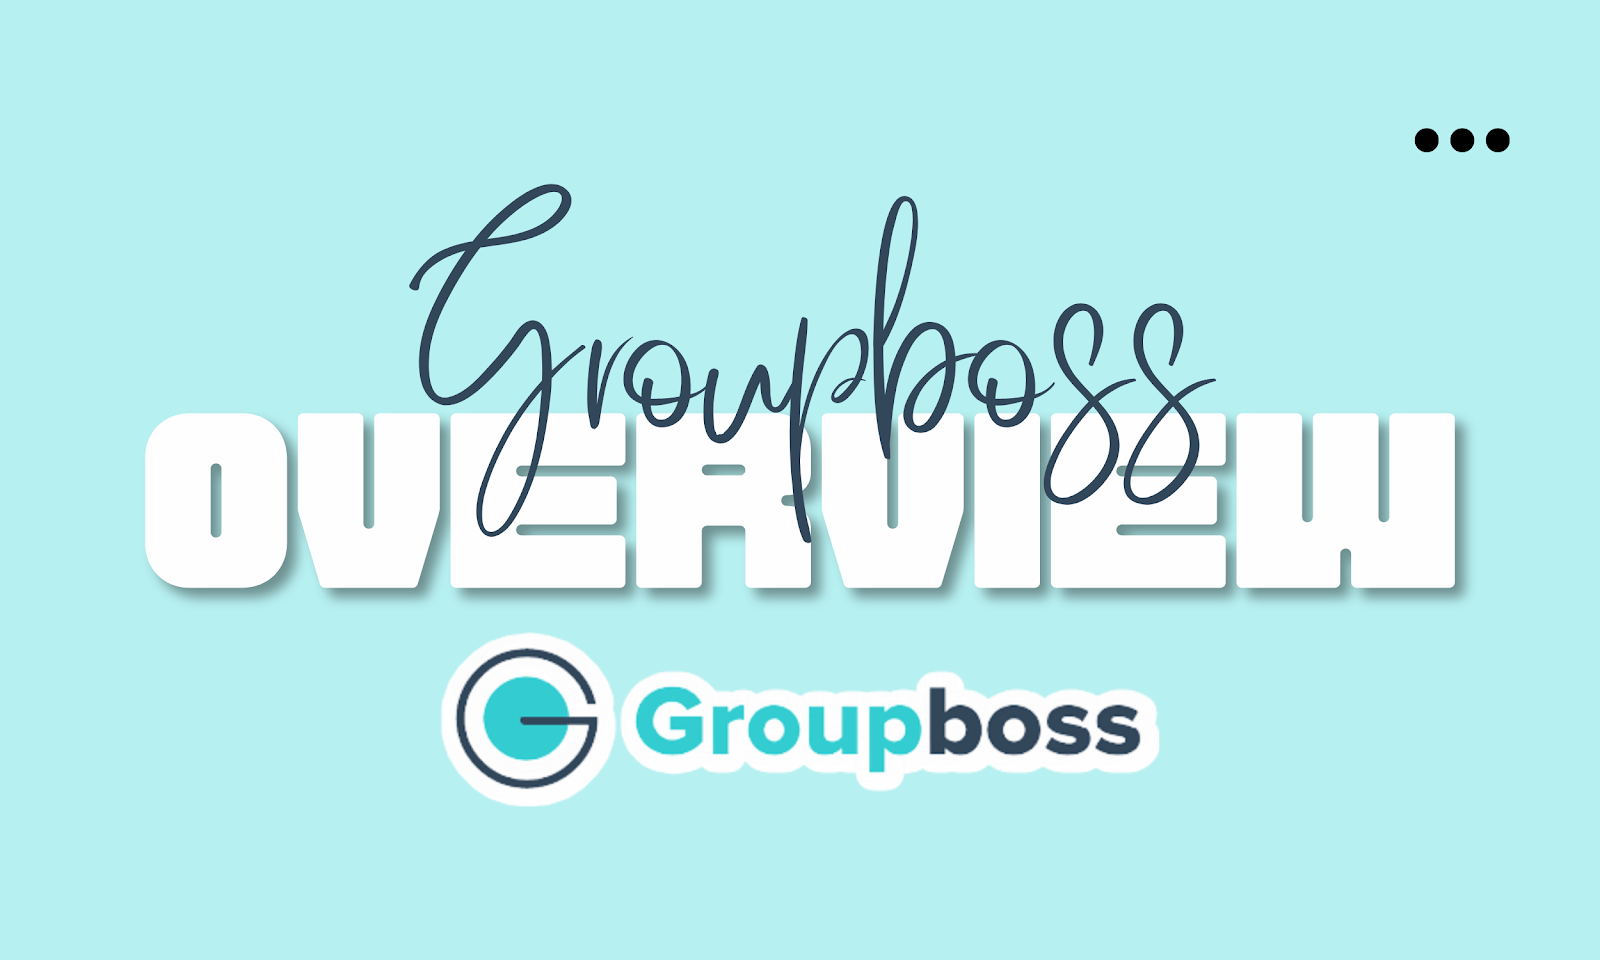 Groupboss Overview